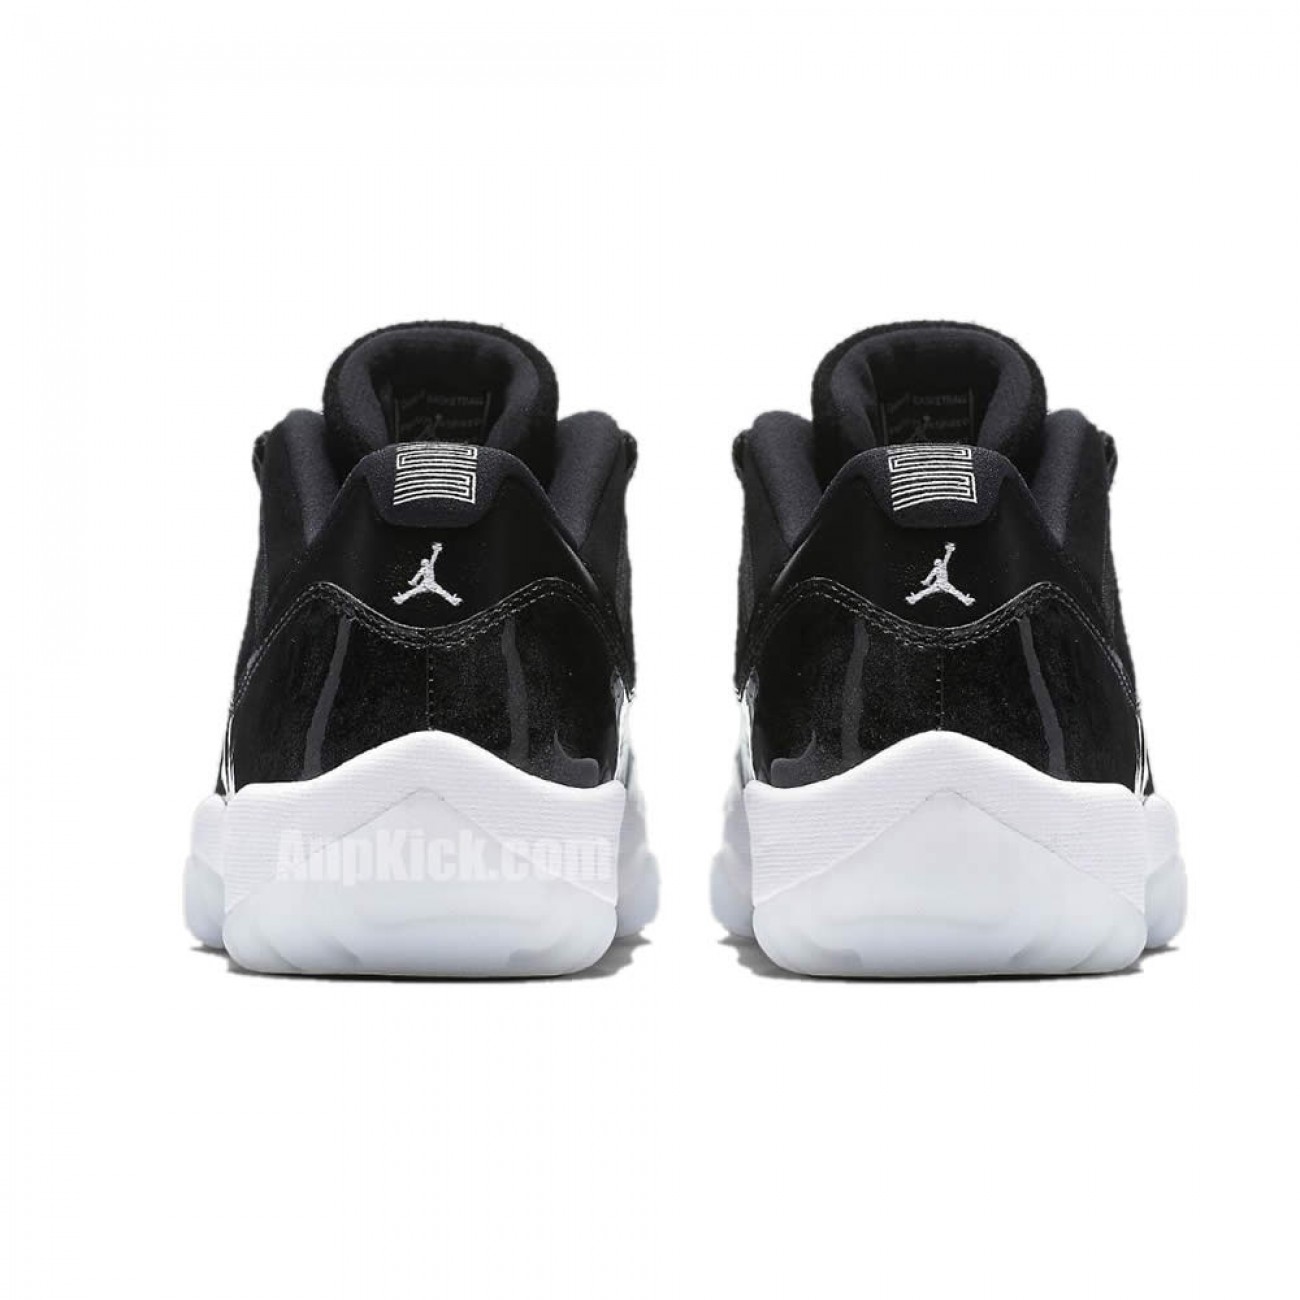 Air Jordan 11 Low "Barons" Black On Feet Grade School For Sale 528895-010